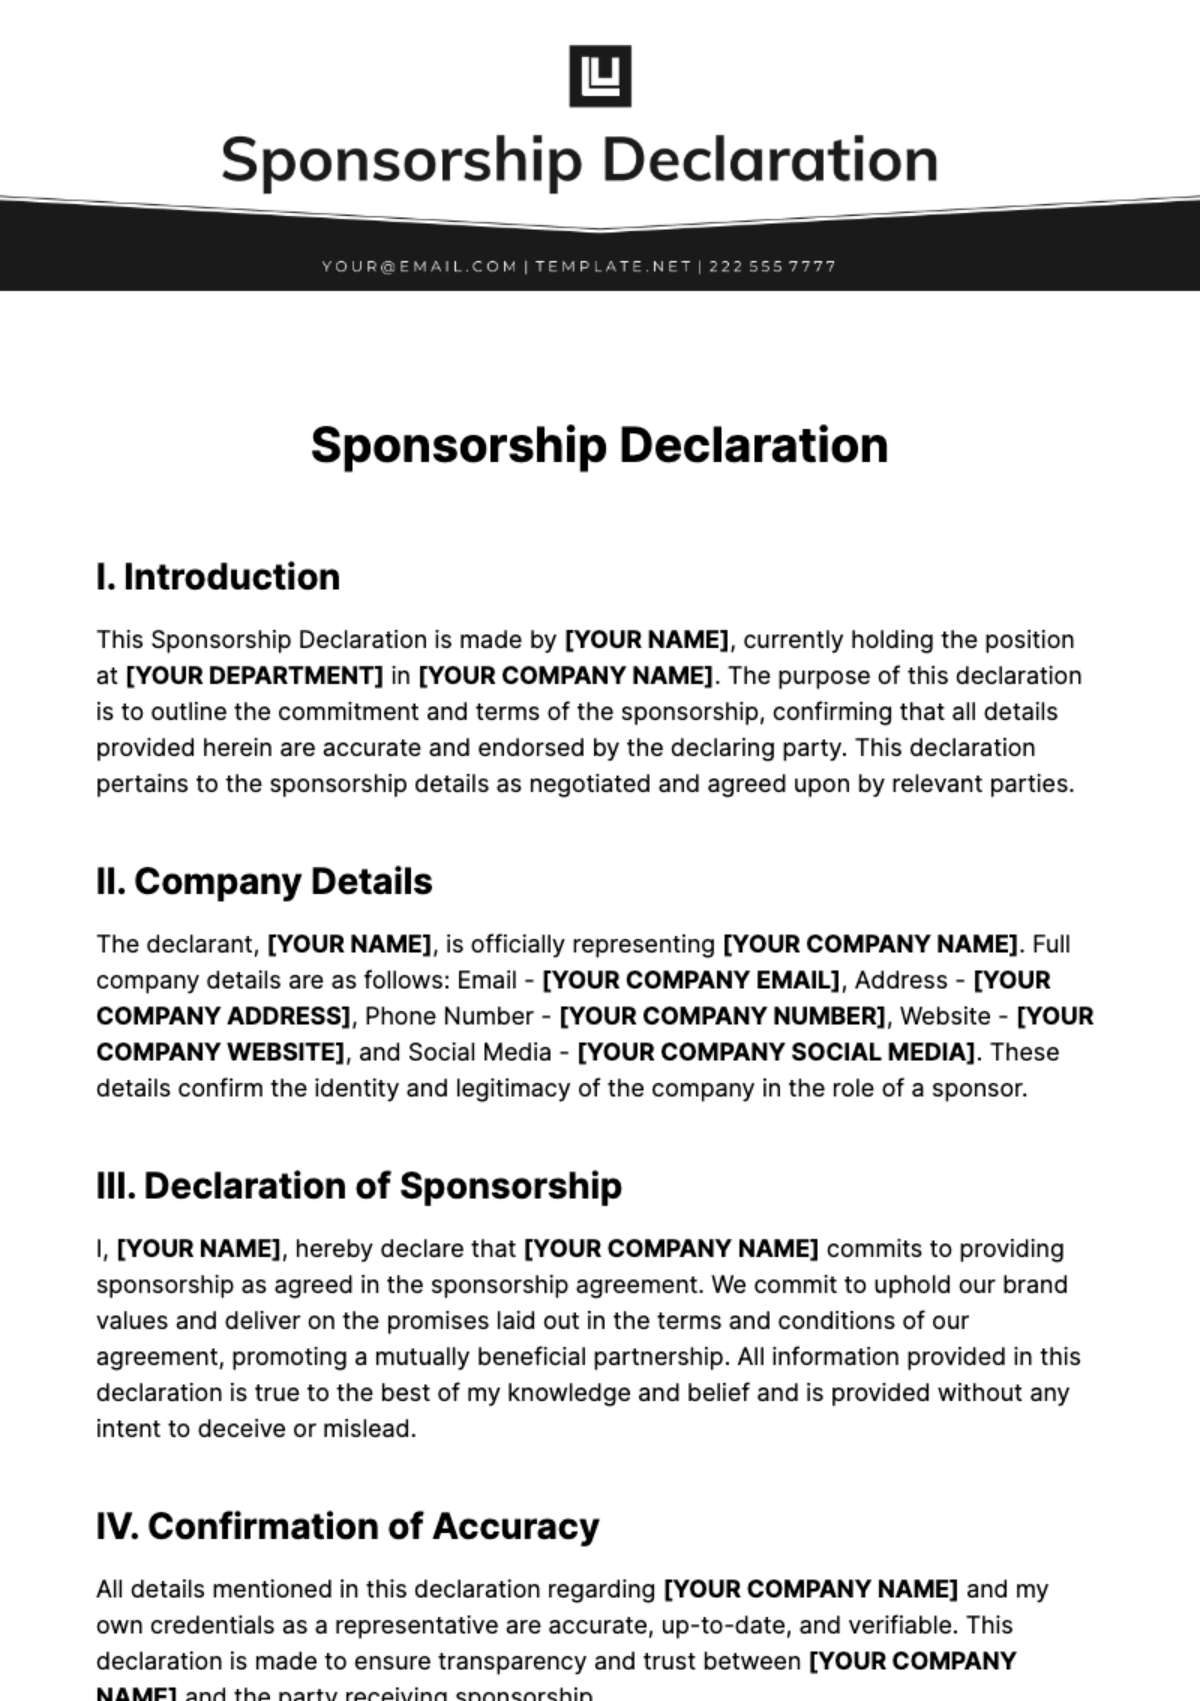 Sponsorship Declaration Template